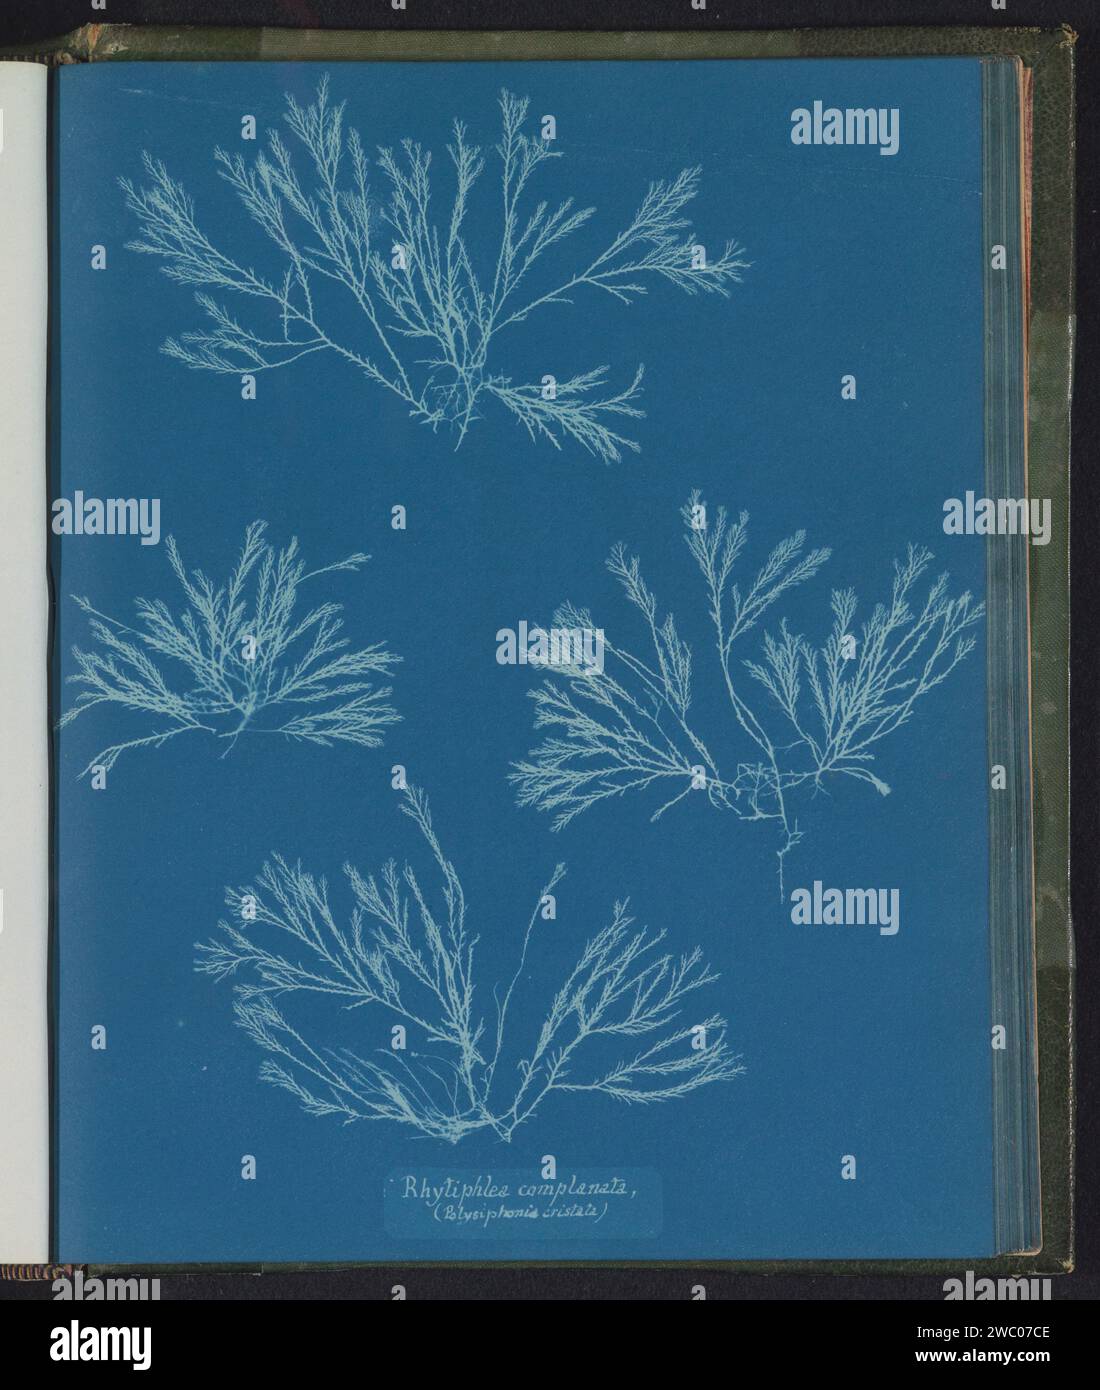 Rhytiphlea complanata / (Polysiphonia cristata), Anna Atkins, c. 1843 - c. 1853 photograph  United Kingdom photographic support cyanotype algae, seaweed Stock Photo